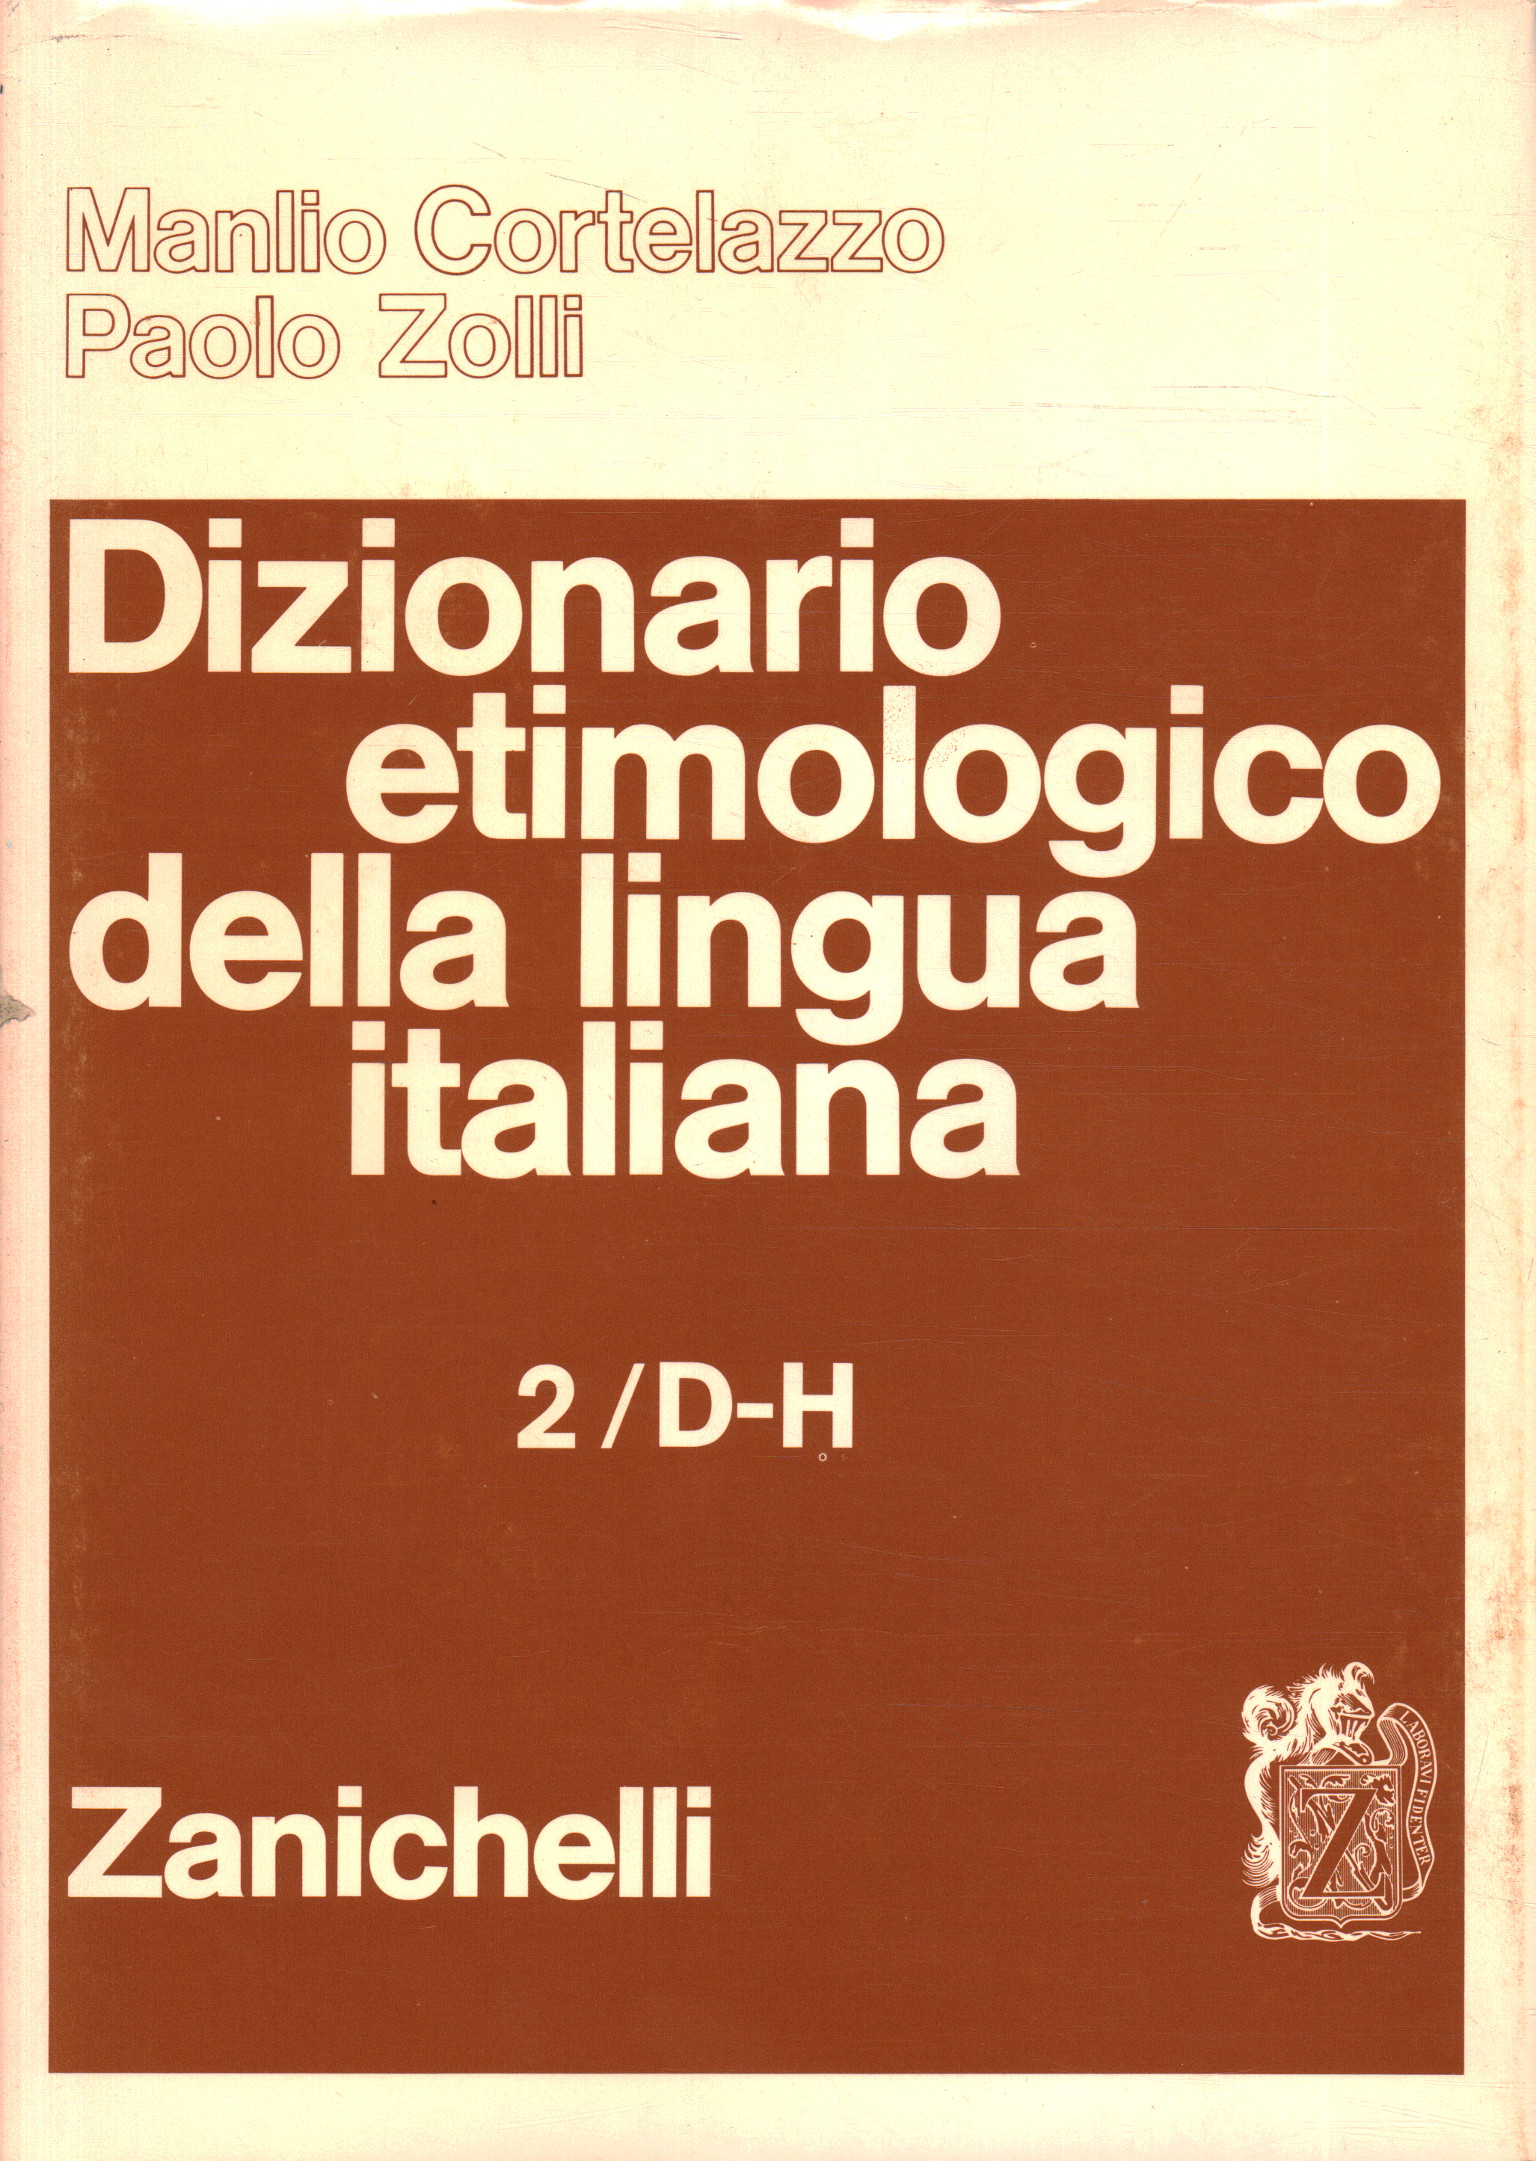 Etymological dictionary of the Italian language